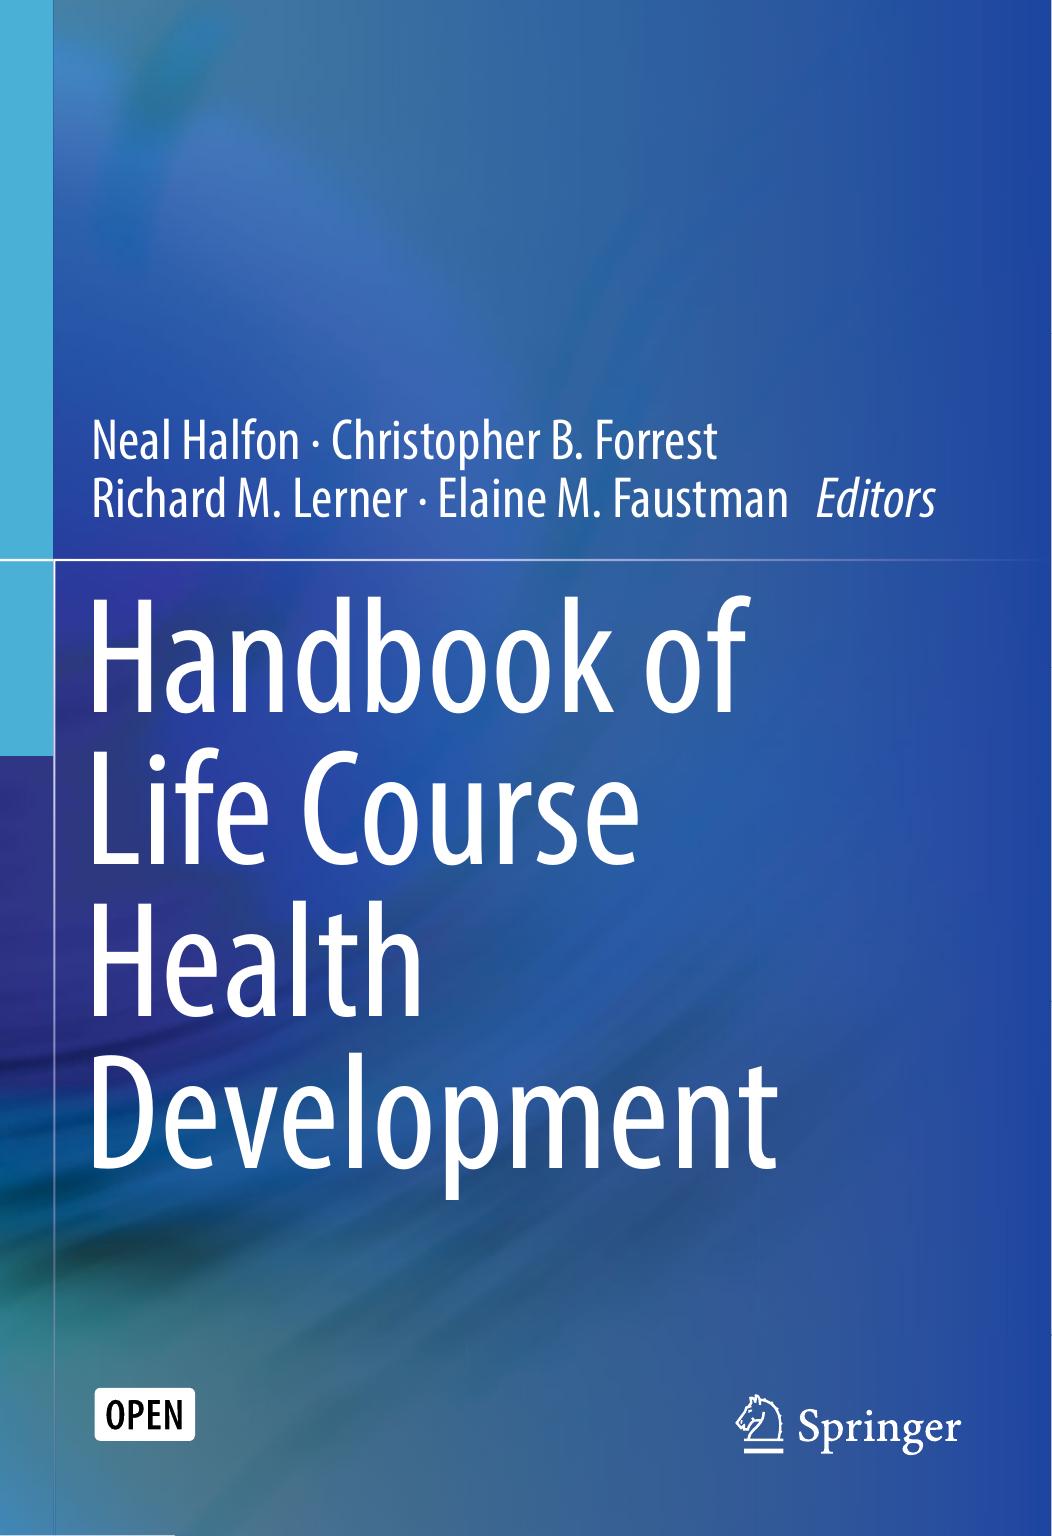 Handbook of Life Course Health Development 2018